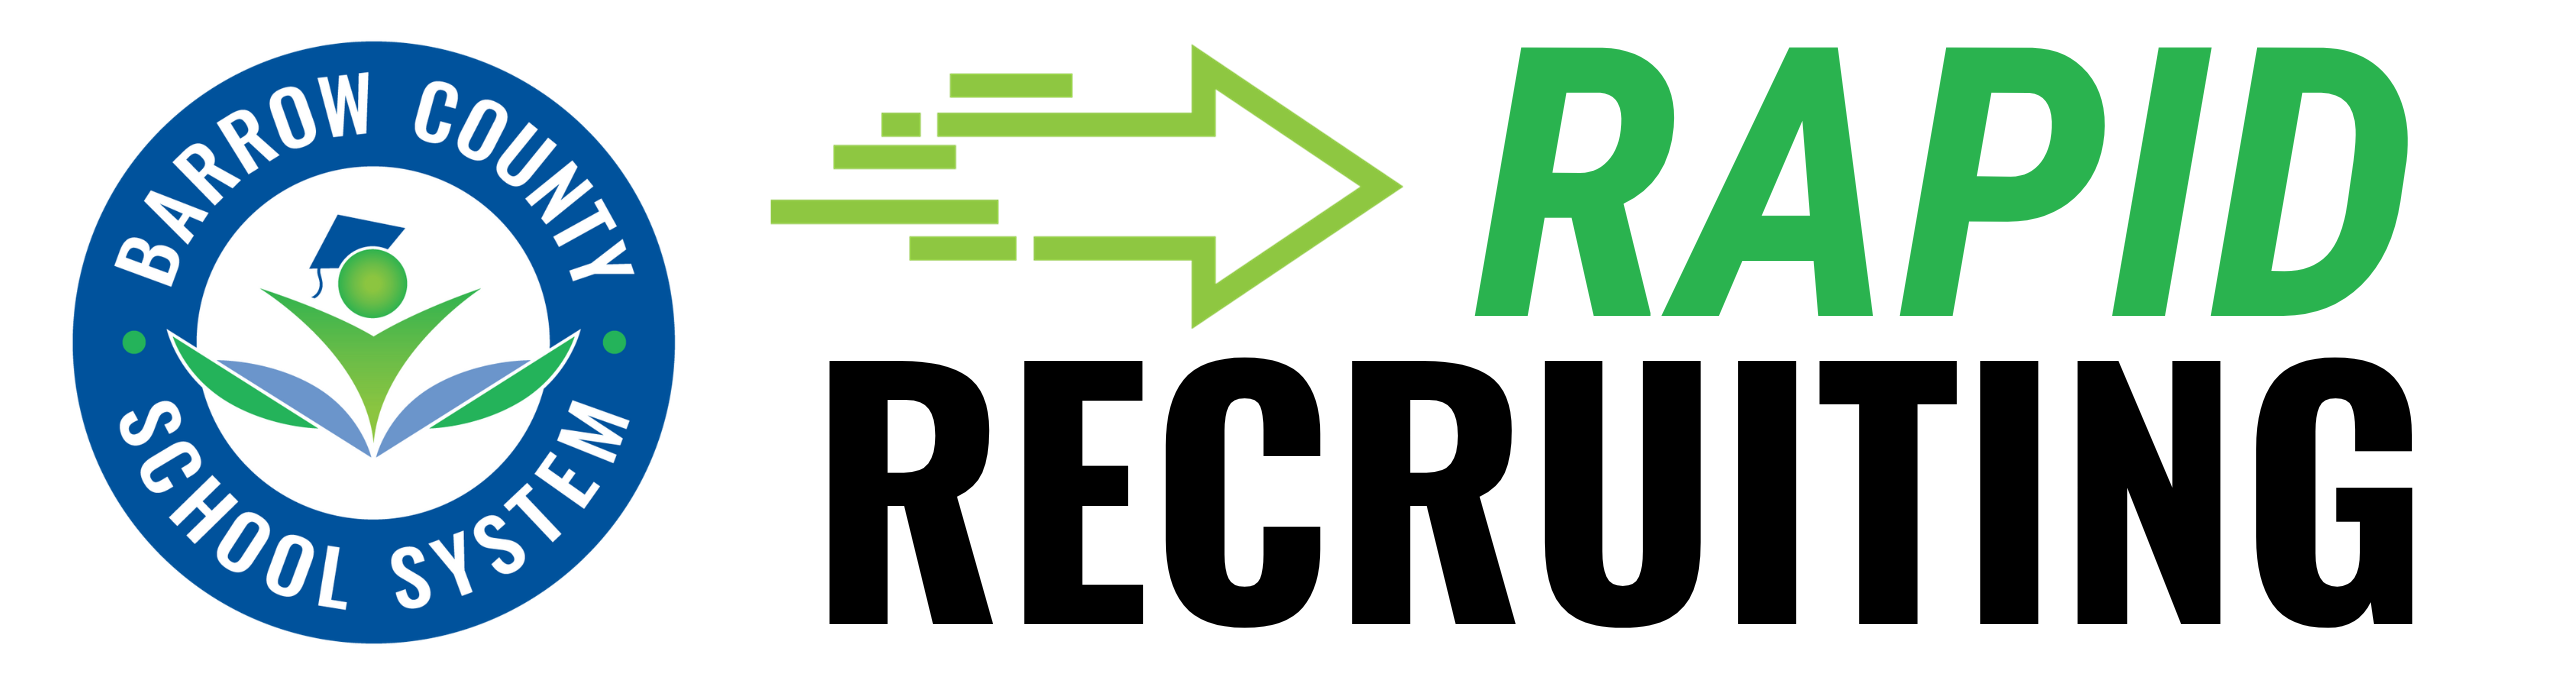 rapid recruiting logo